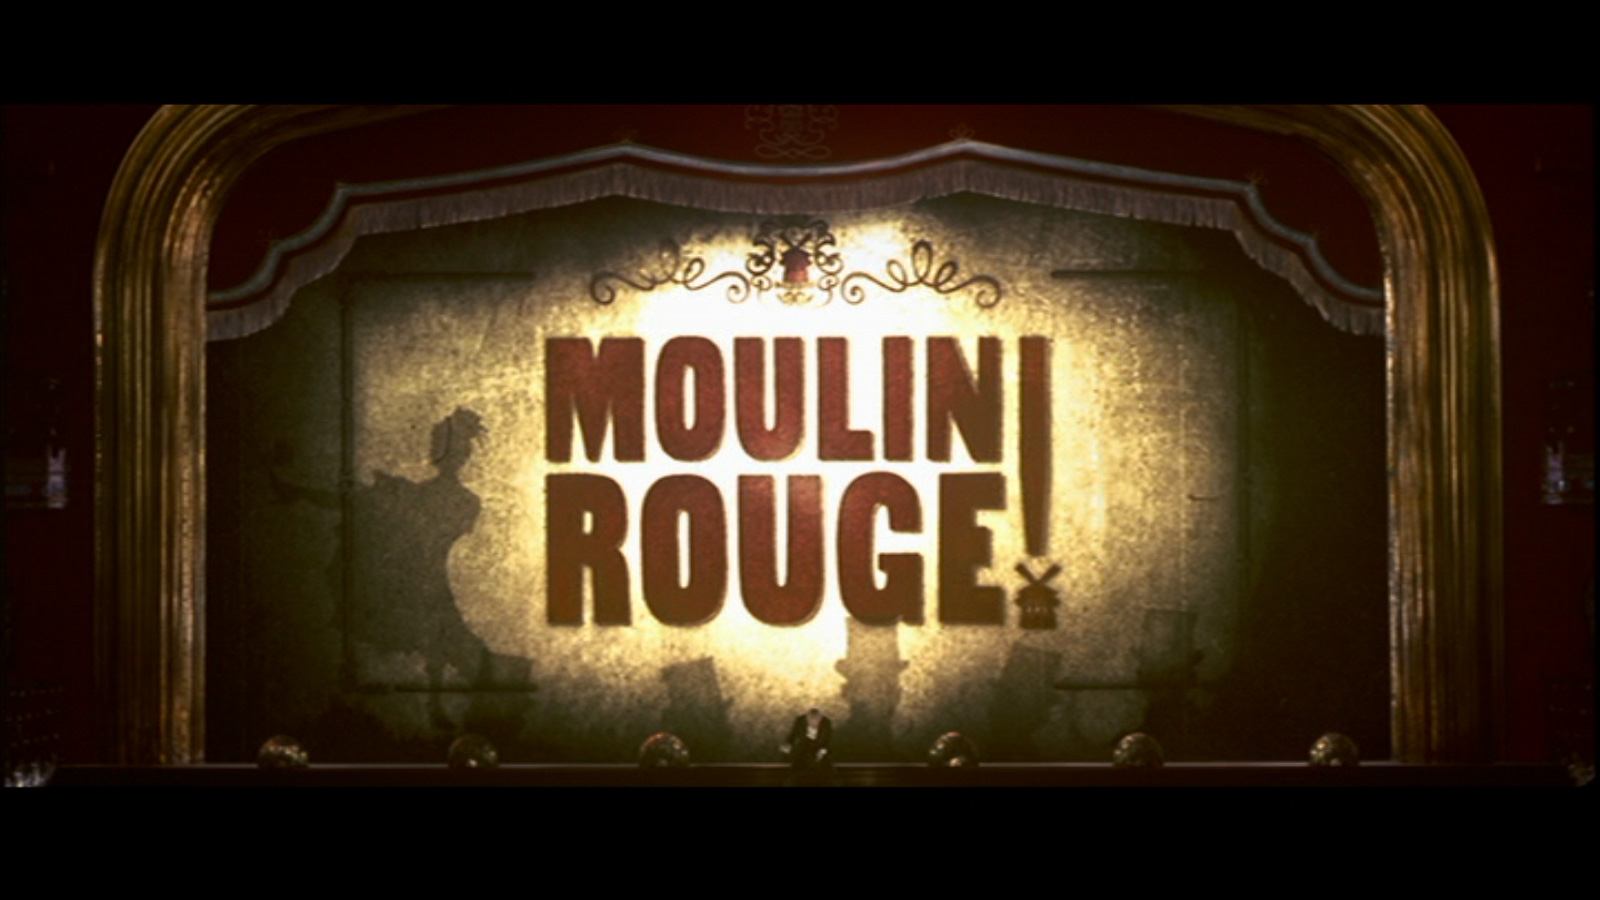 Moulin Rouge Image